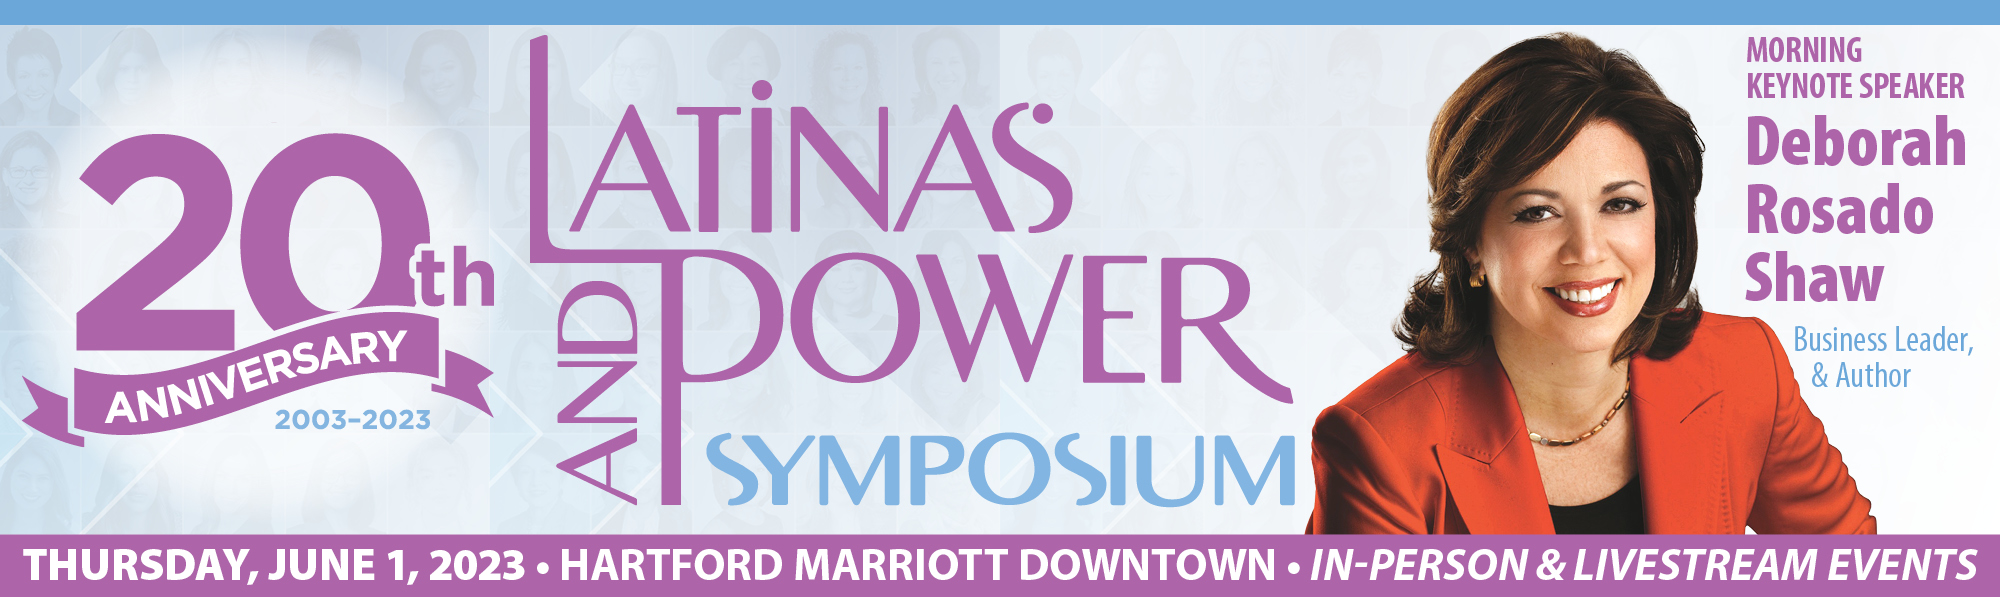 20th Anniversary Latinas & Power Symposium - Tapping Into Your Power - June 1, 2023 - with DEBORAH ROSADO SHAW